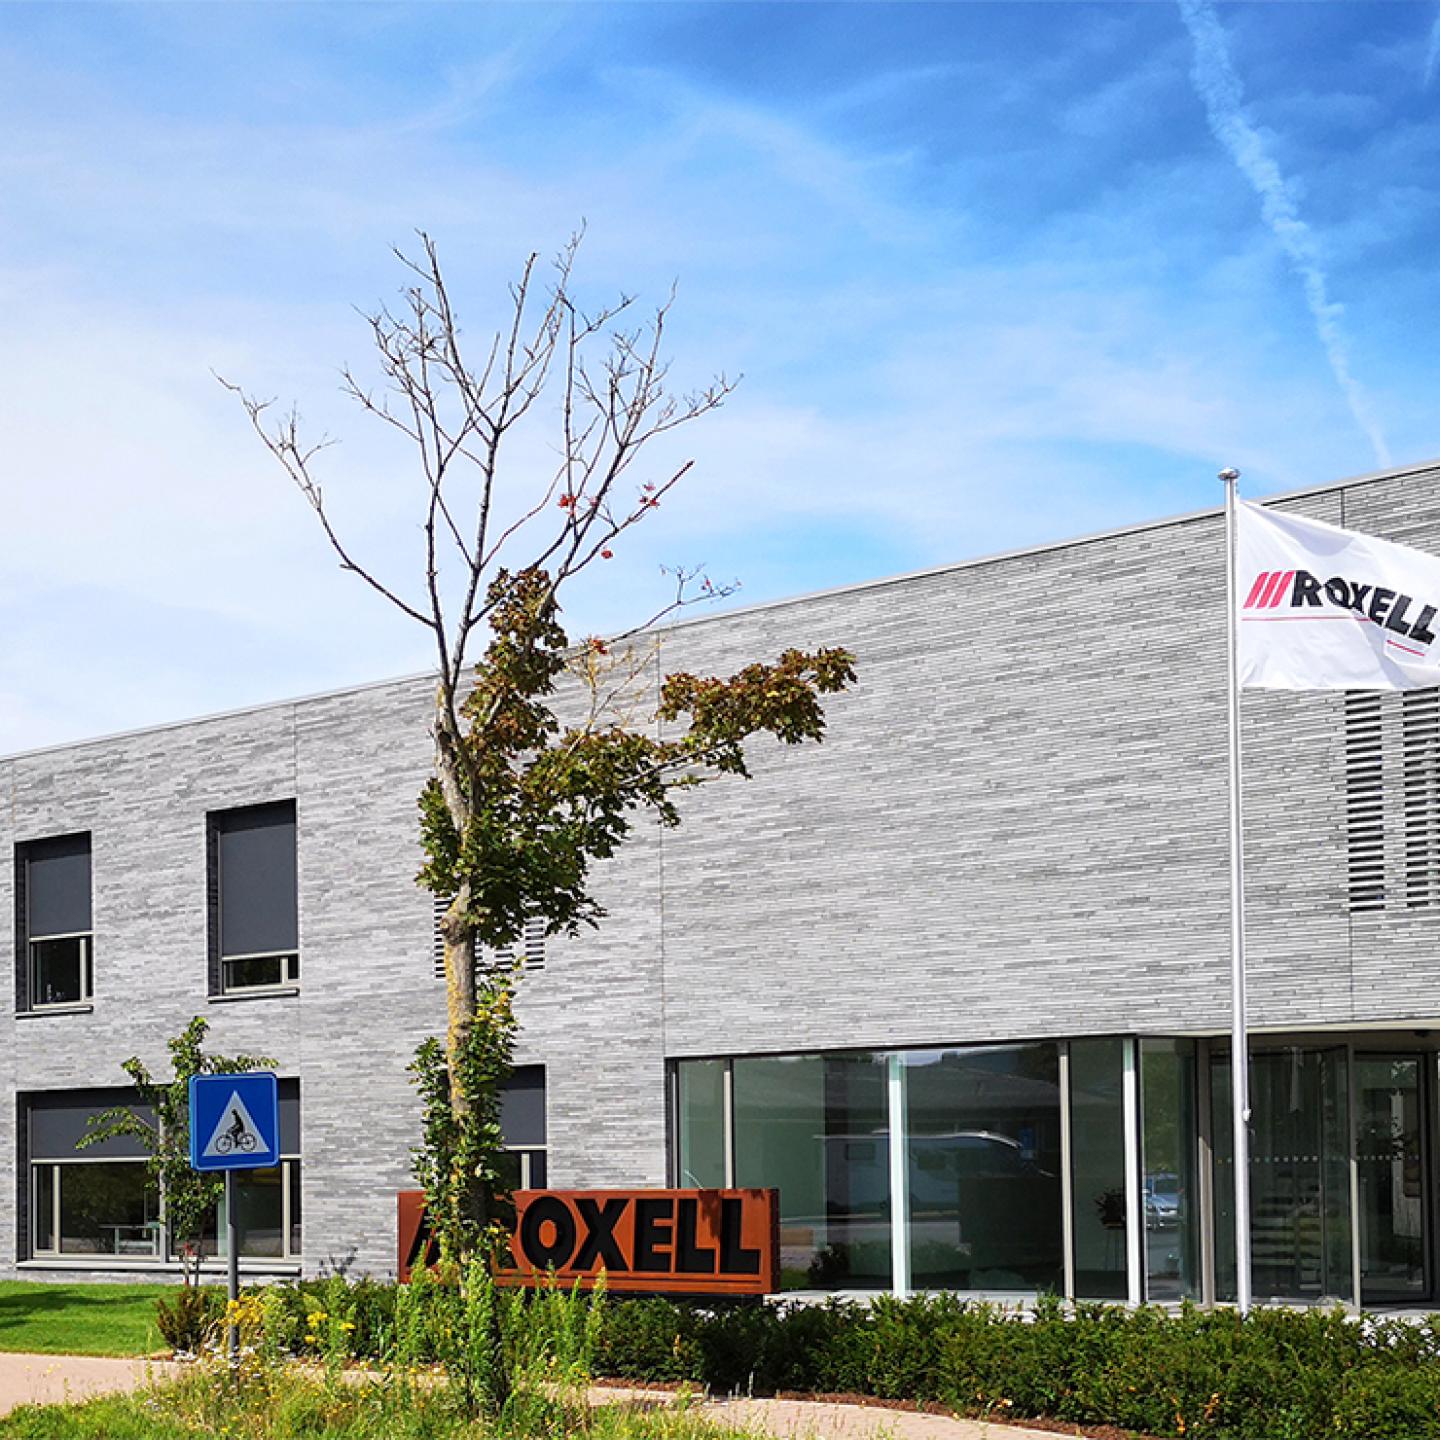 roxell-opens-new-headquarters-maldegem-belgium